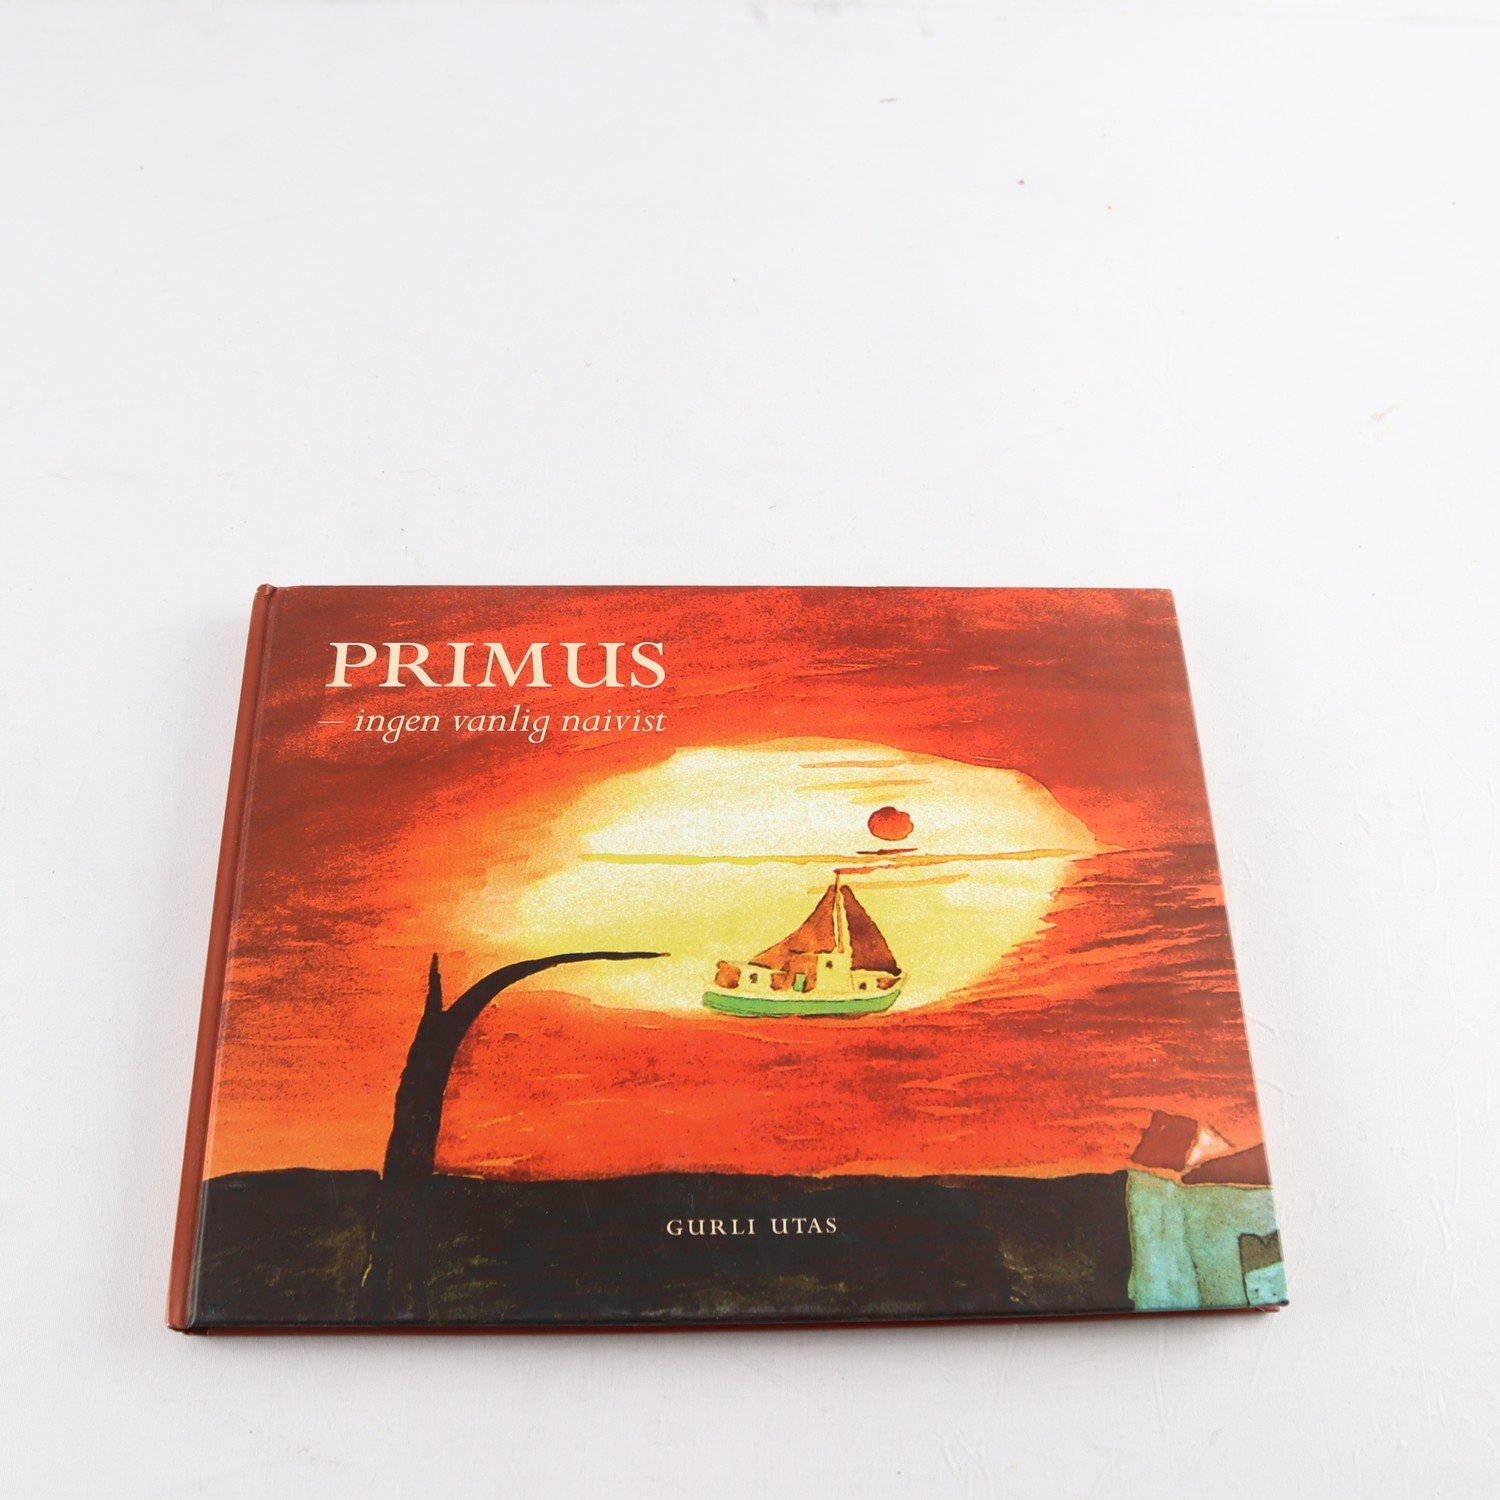 Primus – ingen vanlig naivist, Gurli Utas